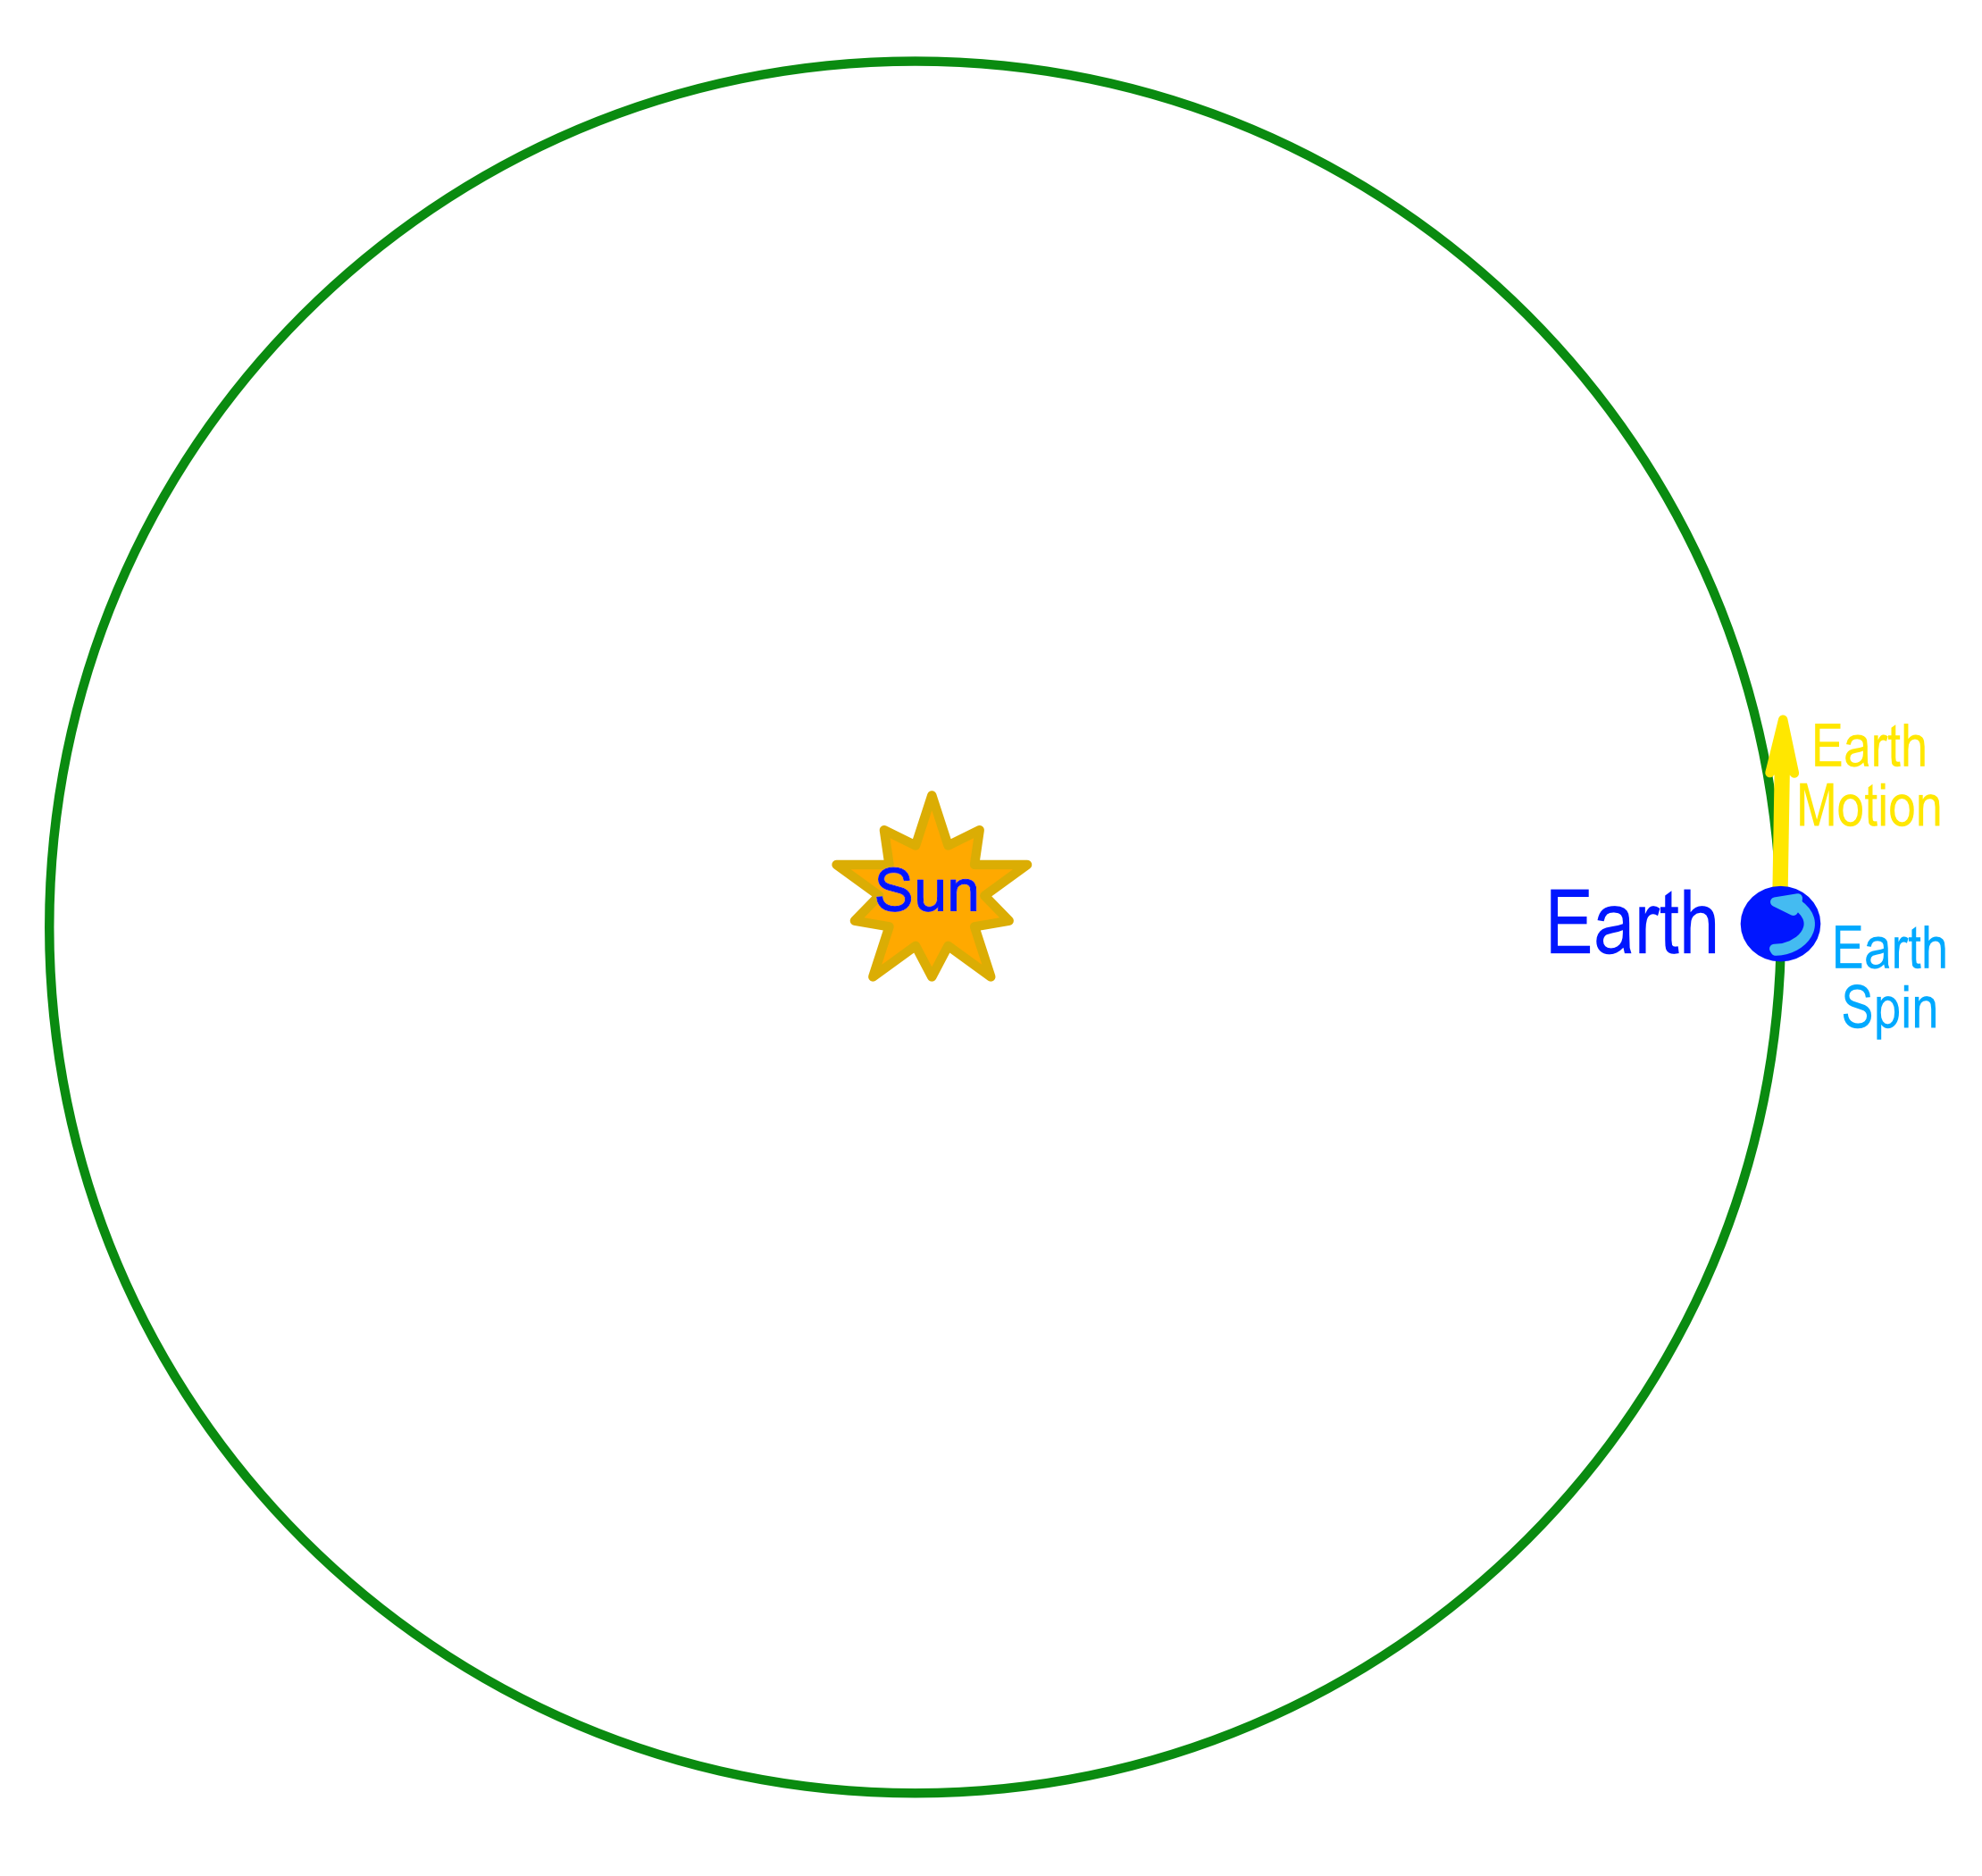 Earth orbit seen from above the Sun